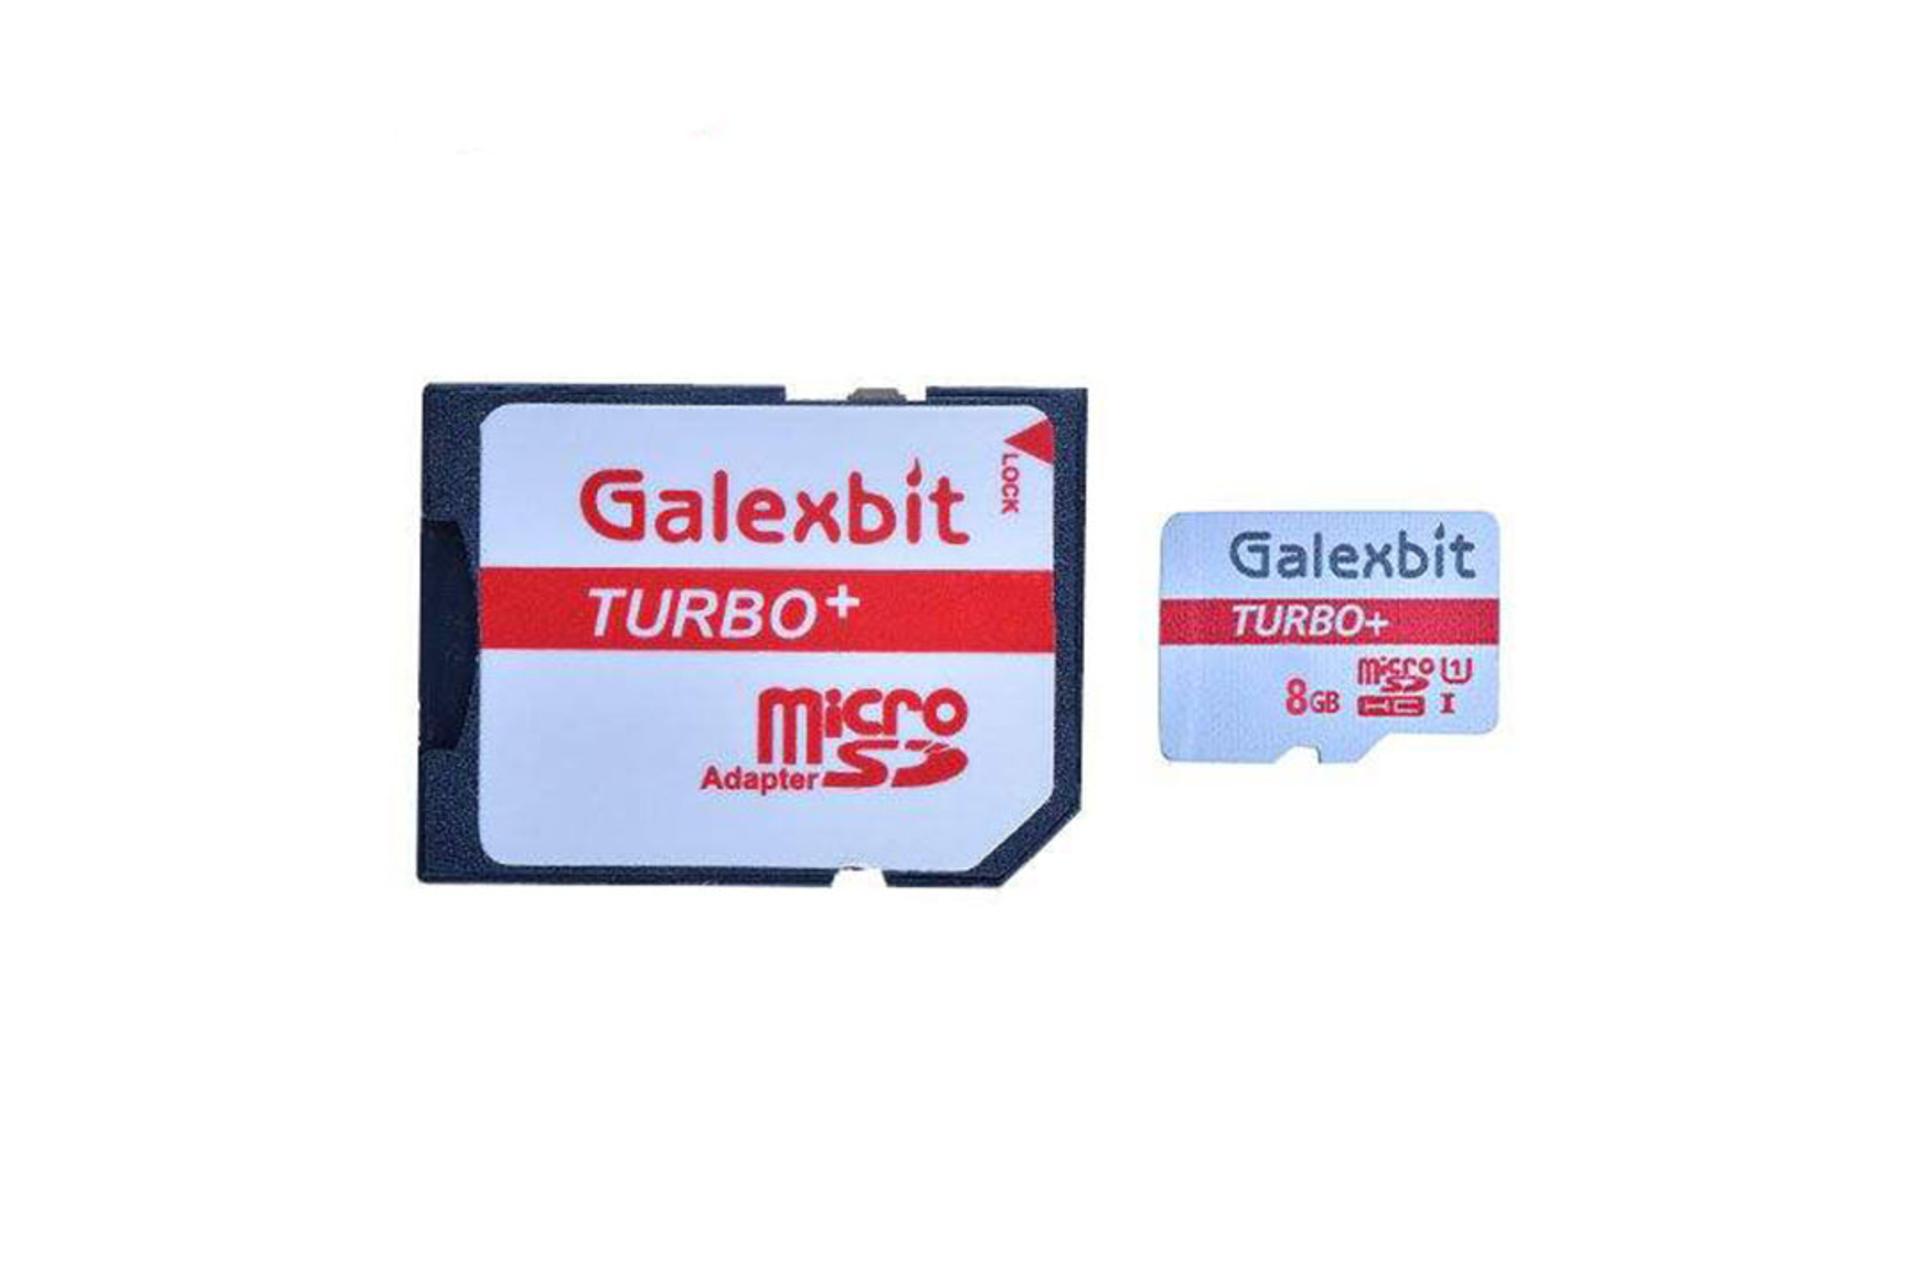 Galexbit Turbo+ microSDHC Class 10 UHS-I U1 8GB